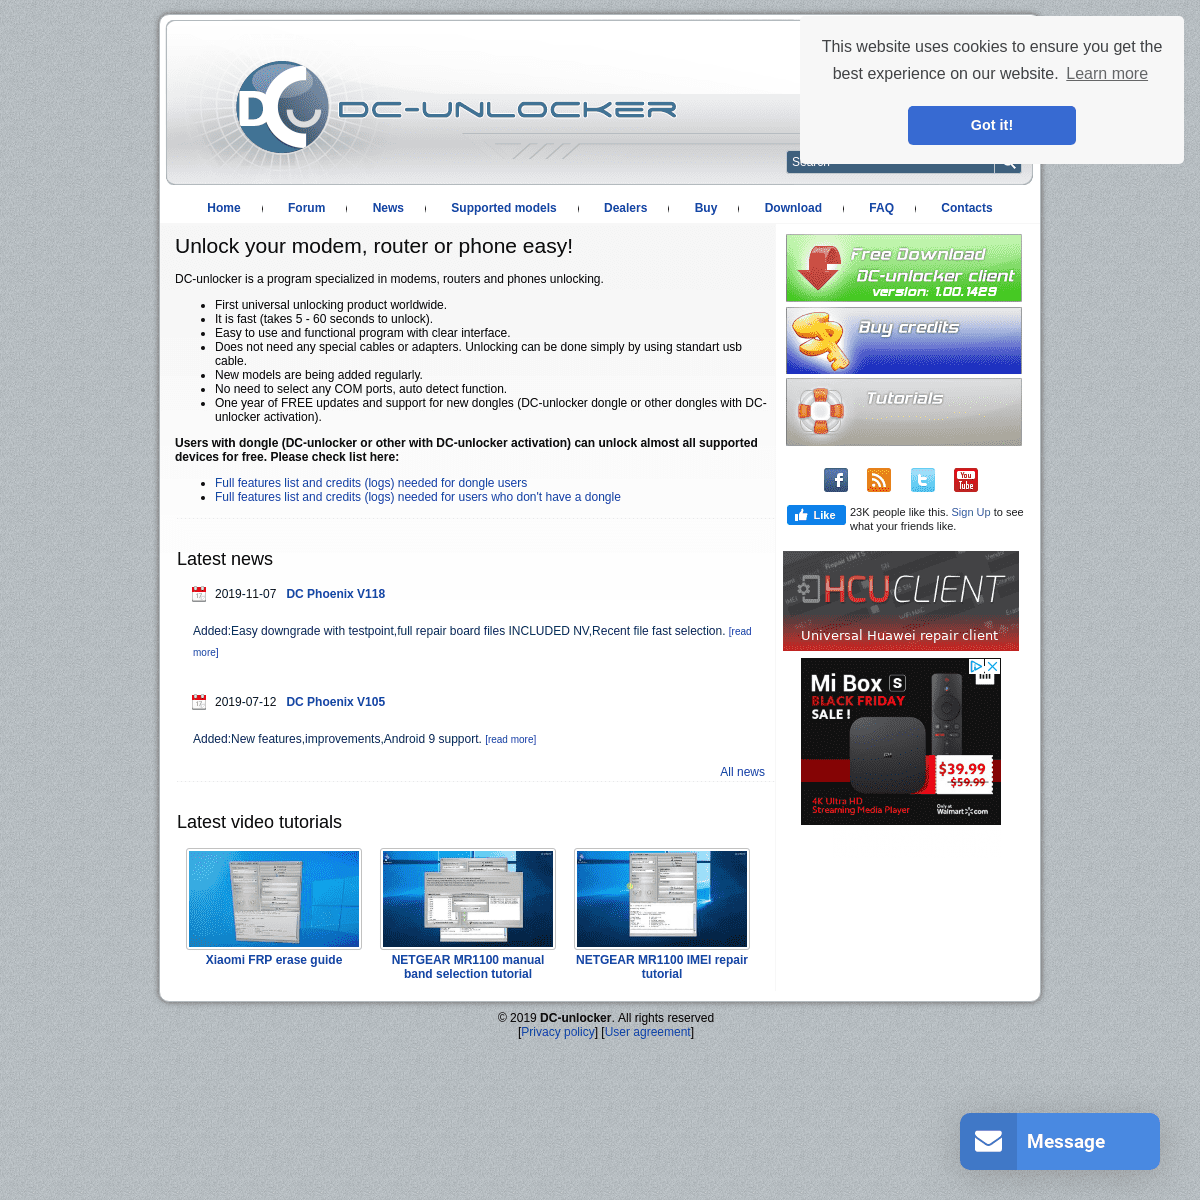 A complete backup of dc-unlocker.com